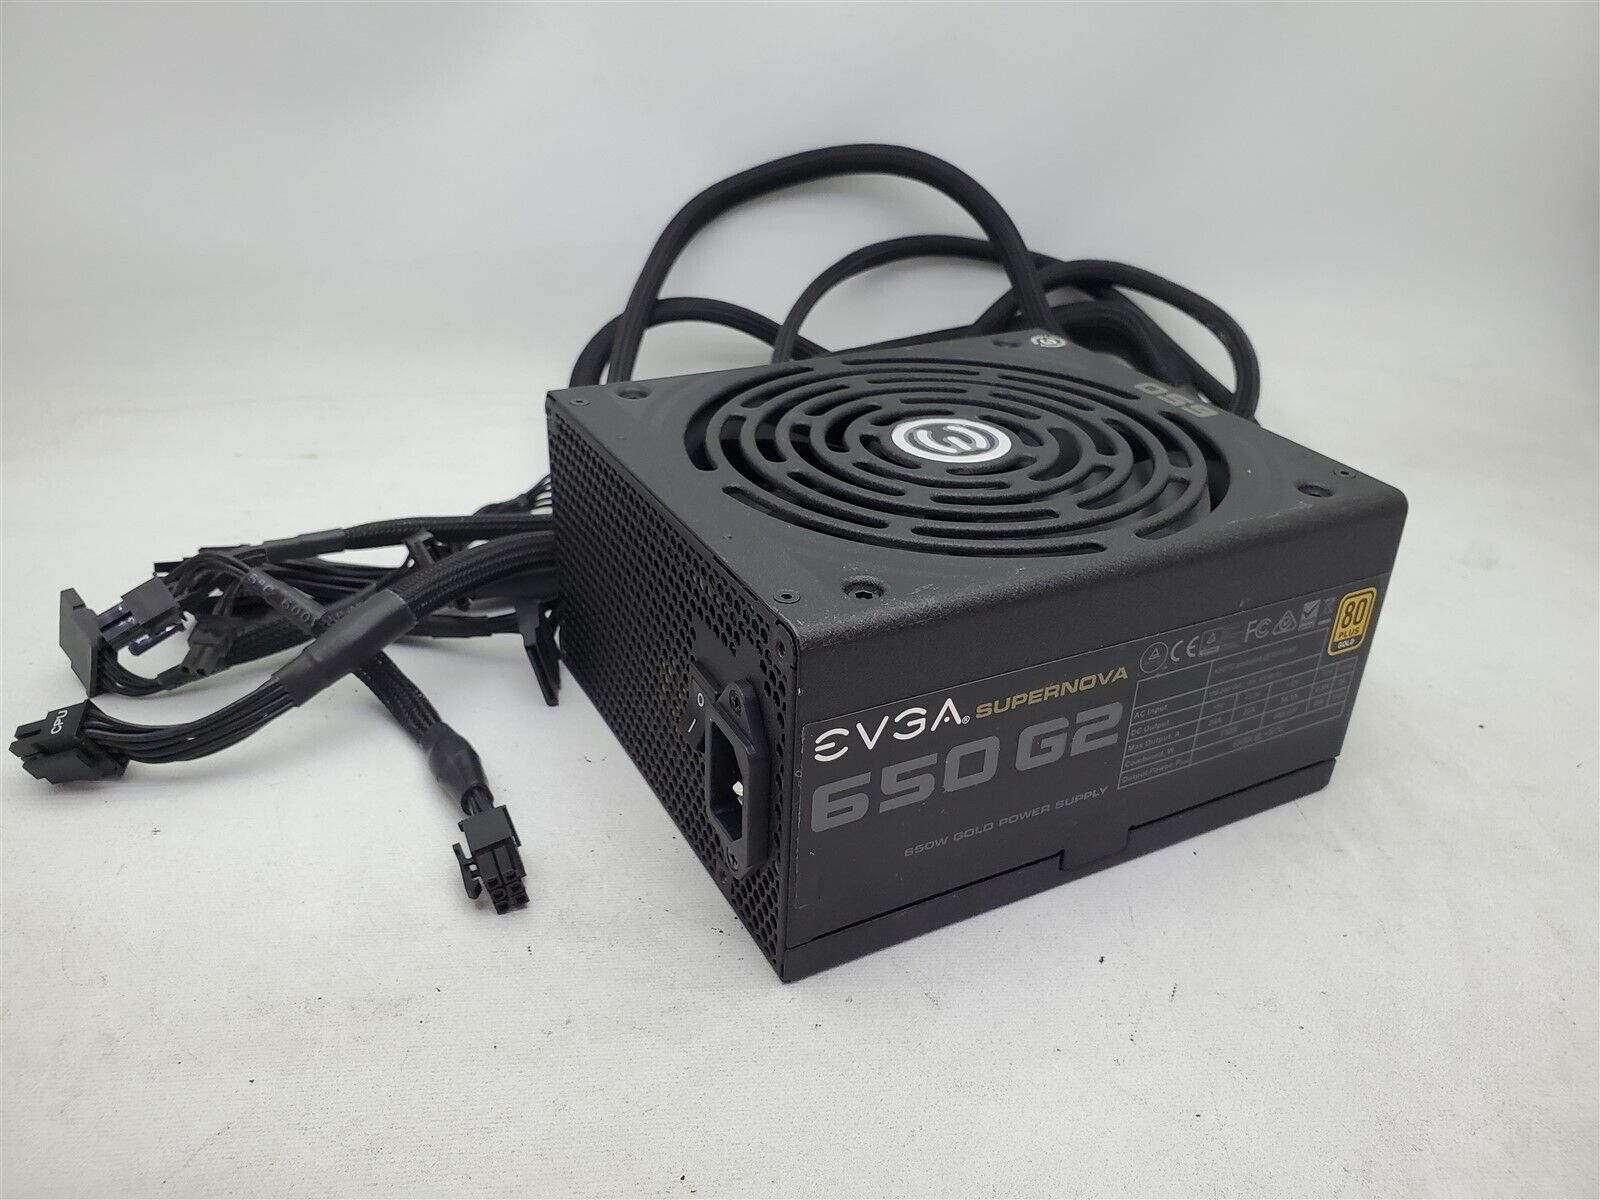  EVGA SuperNova 650 G2 80+ Gold 650 ECO Mode Fully Modular Power Supply